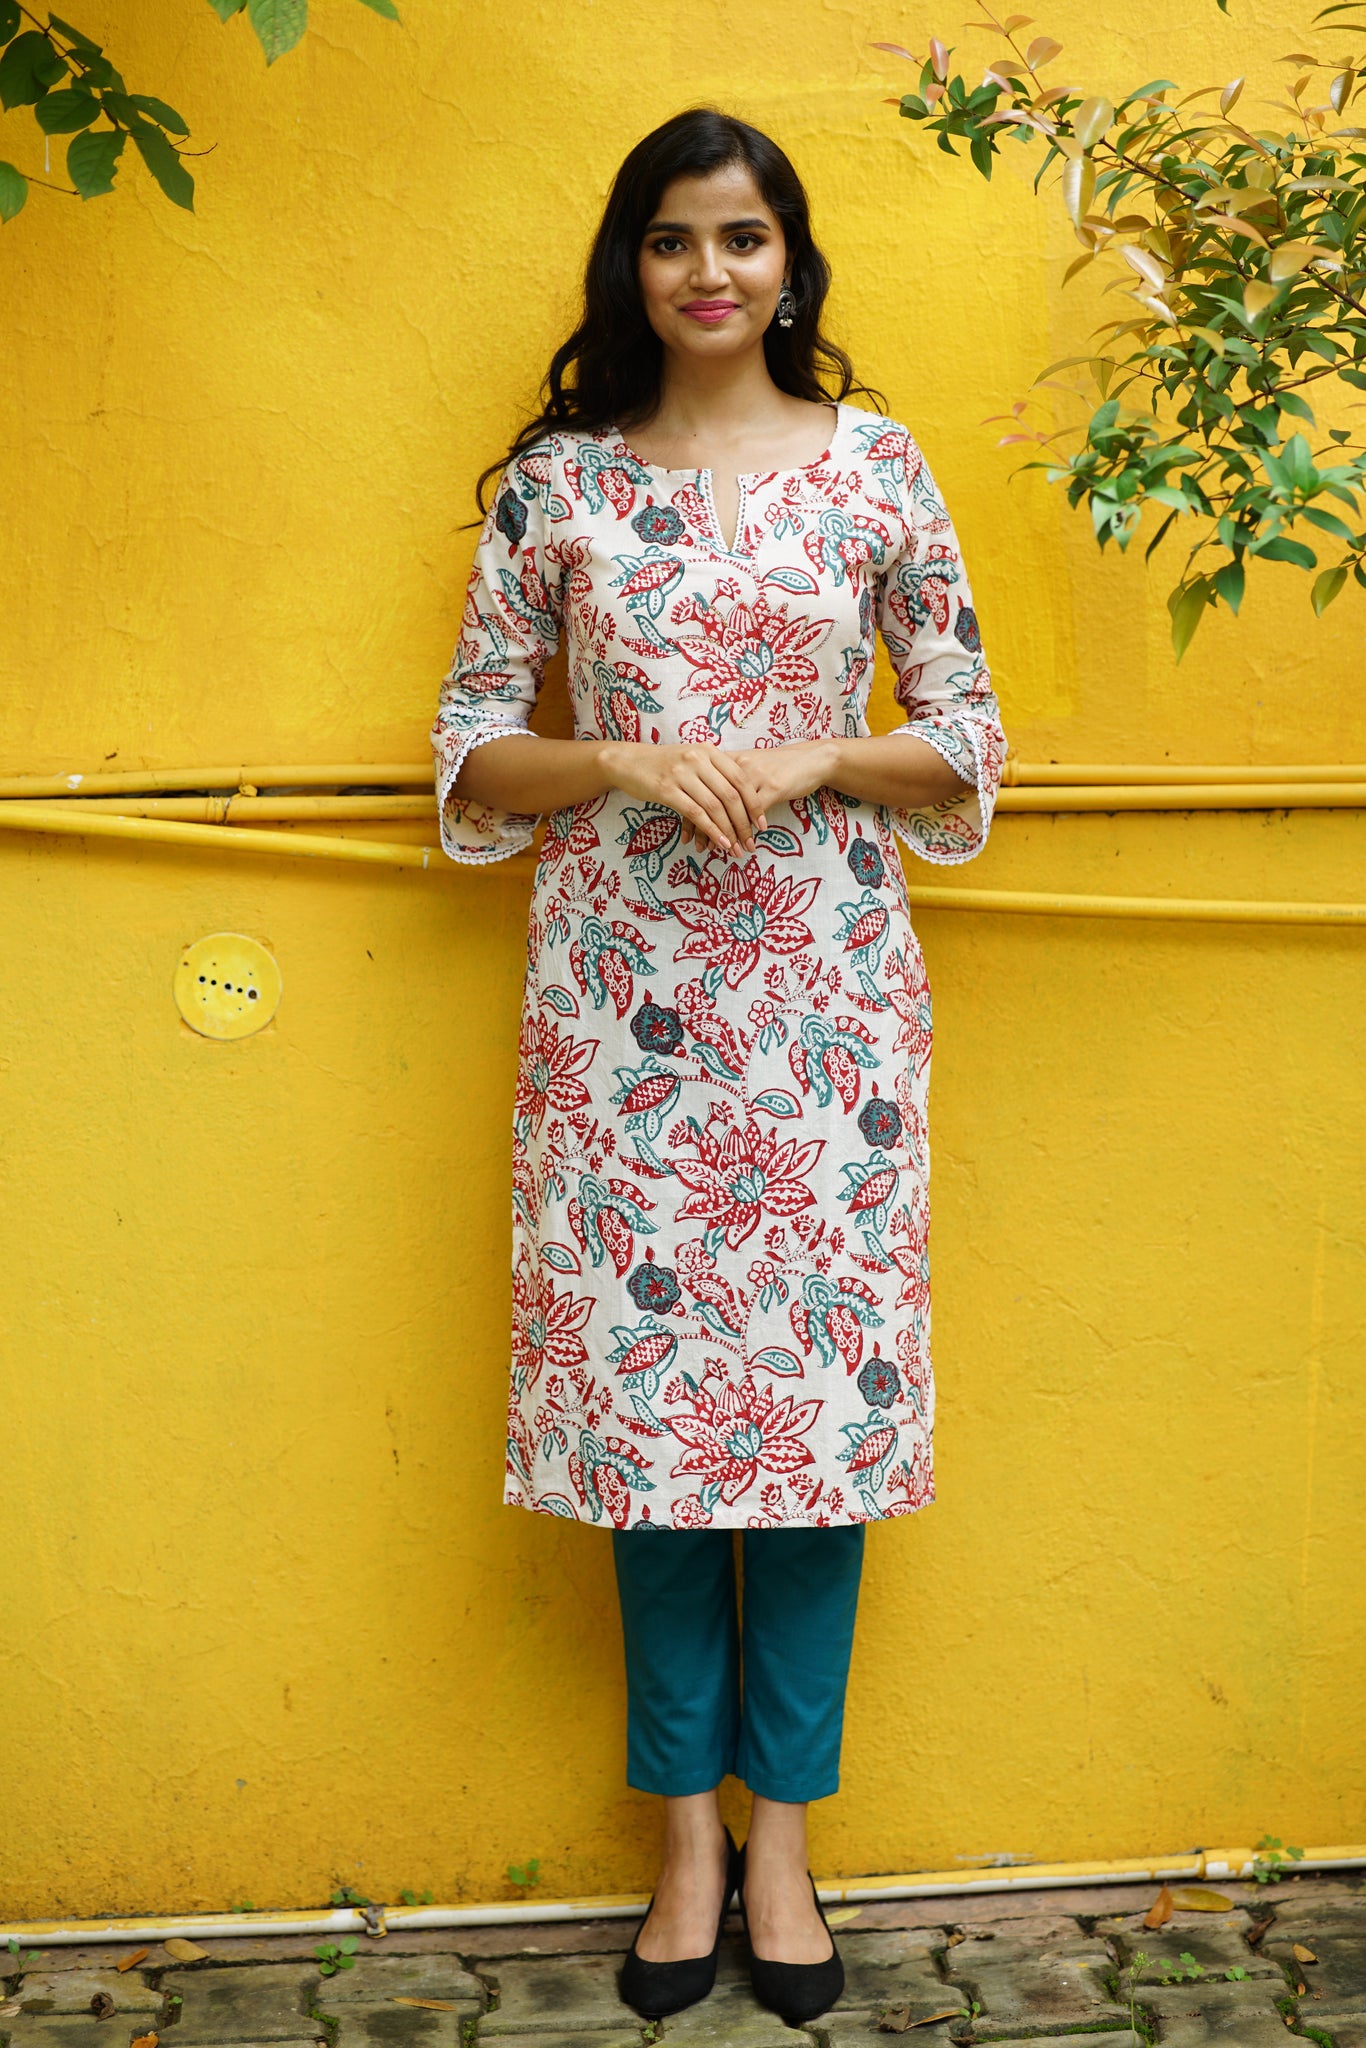 a woman wearing a floral printed kurta.